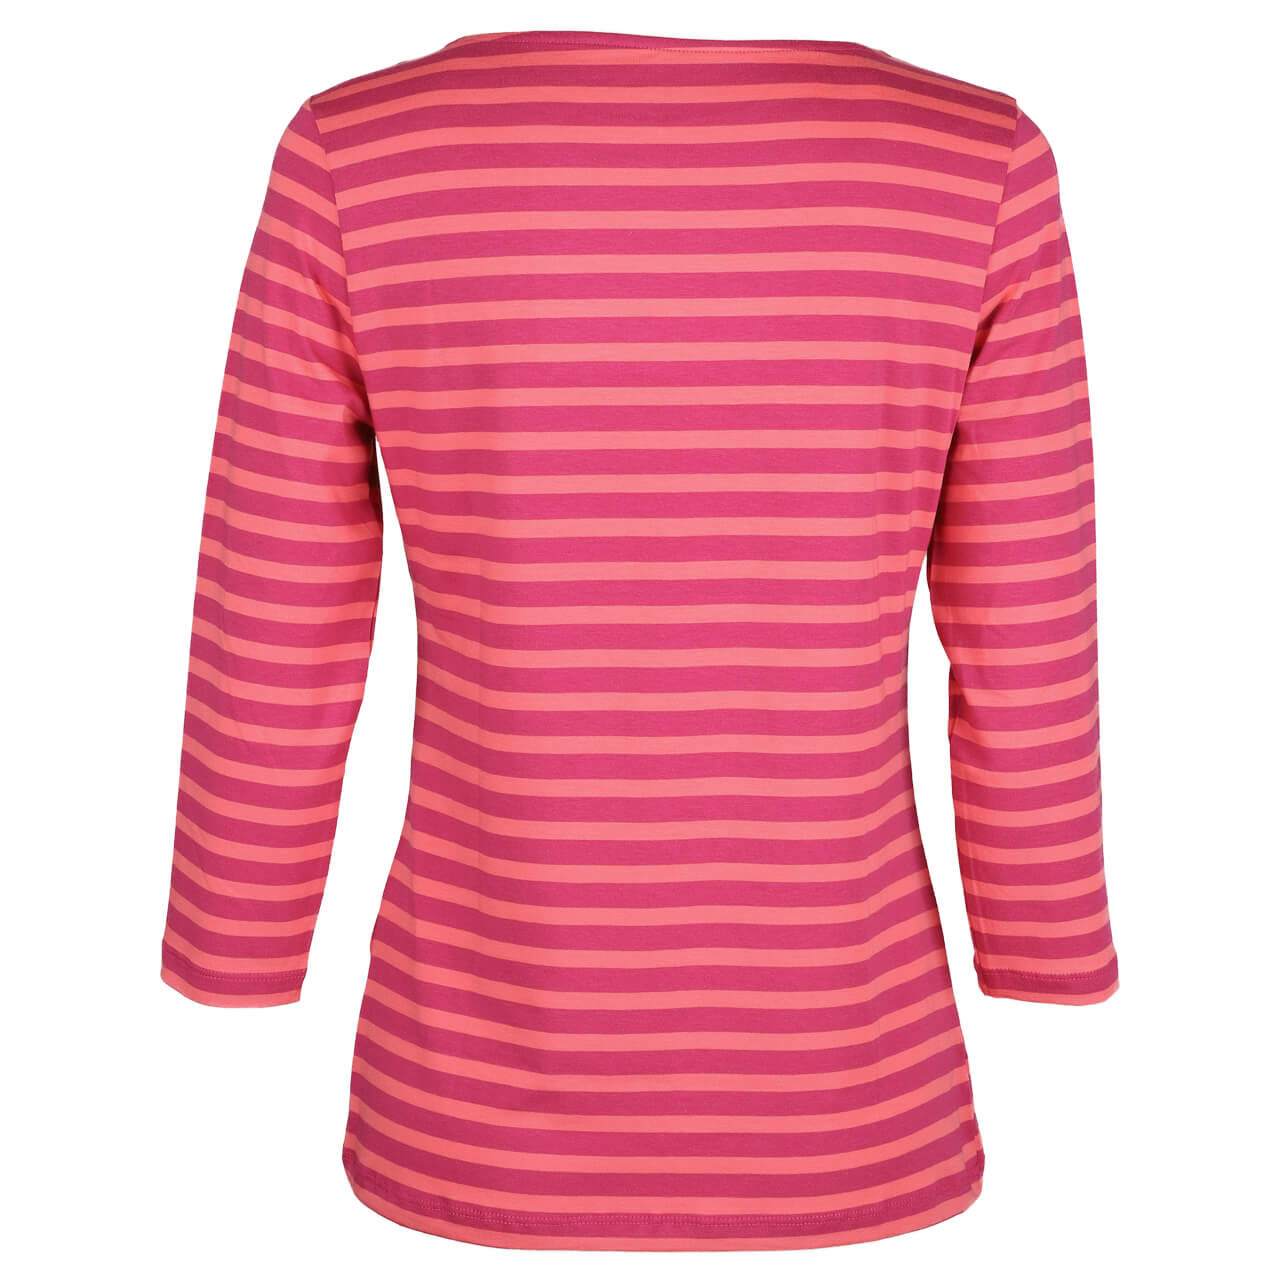 Munich Freedom Damen 3/4 Arm Shirt pink/coral